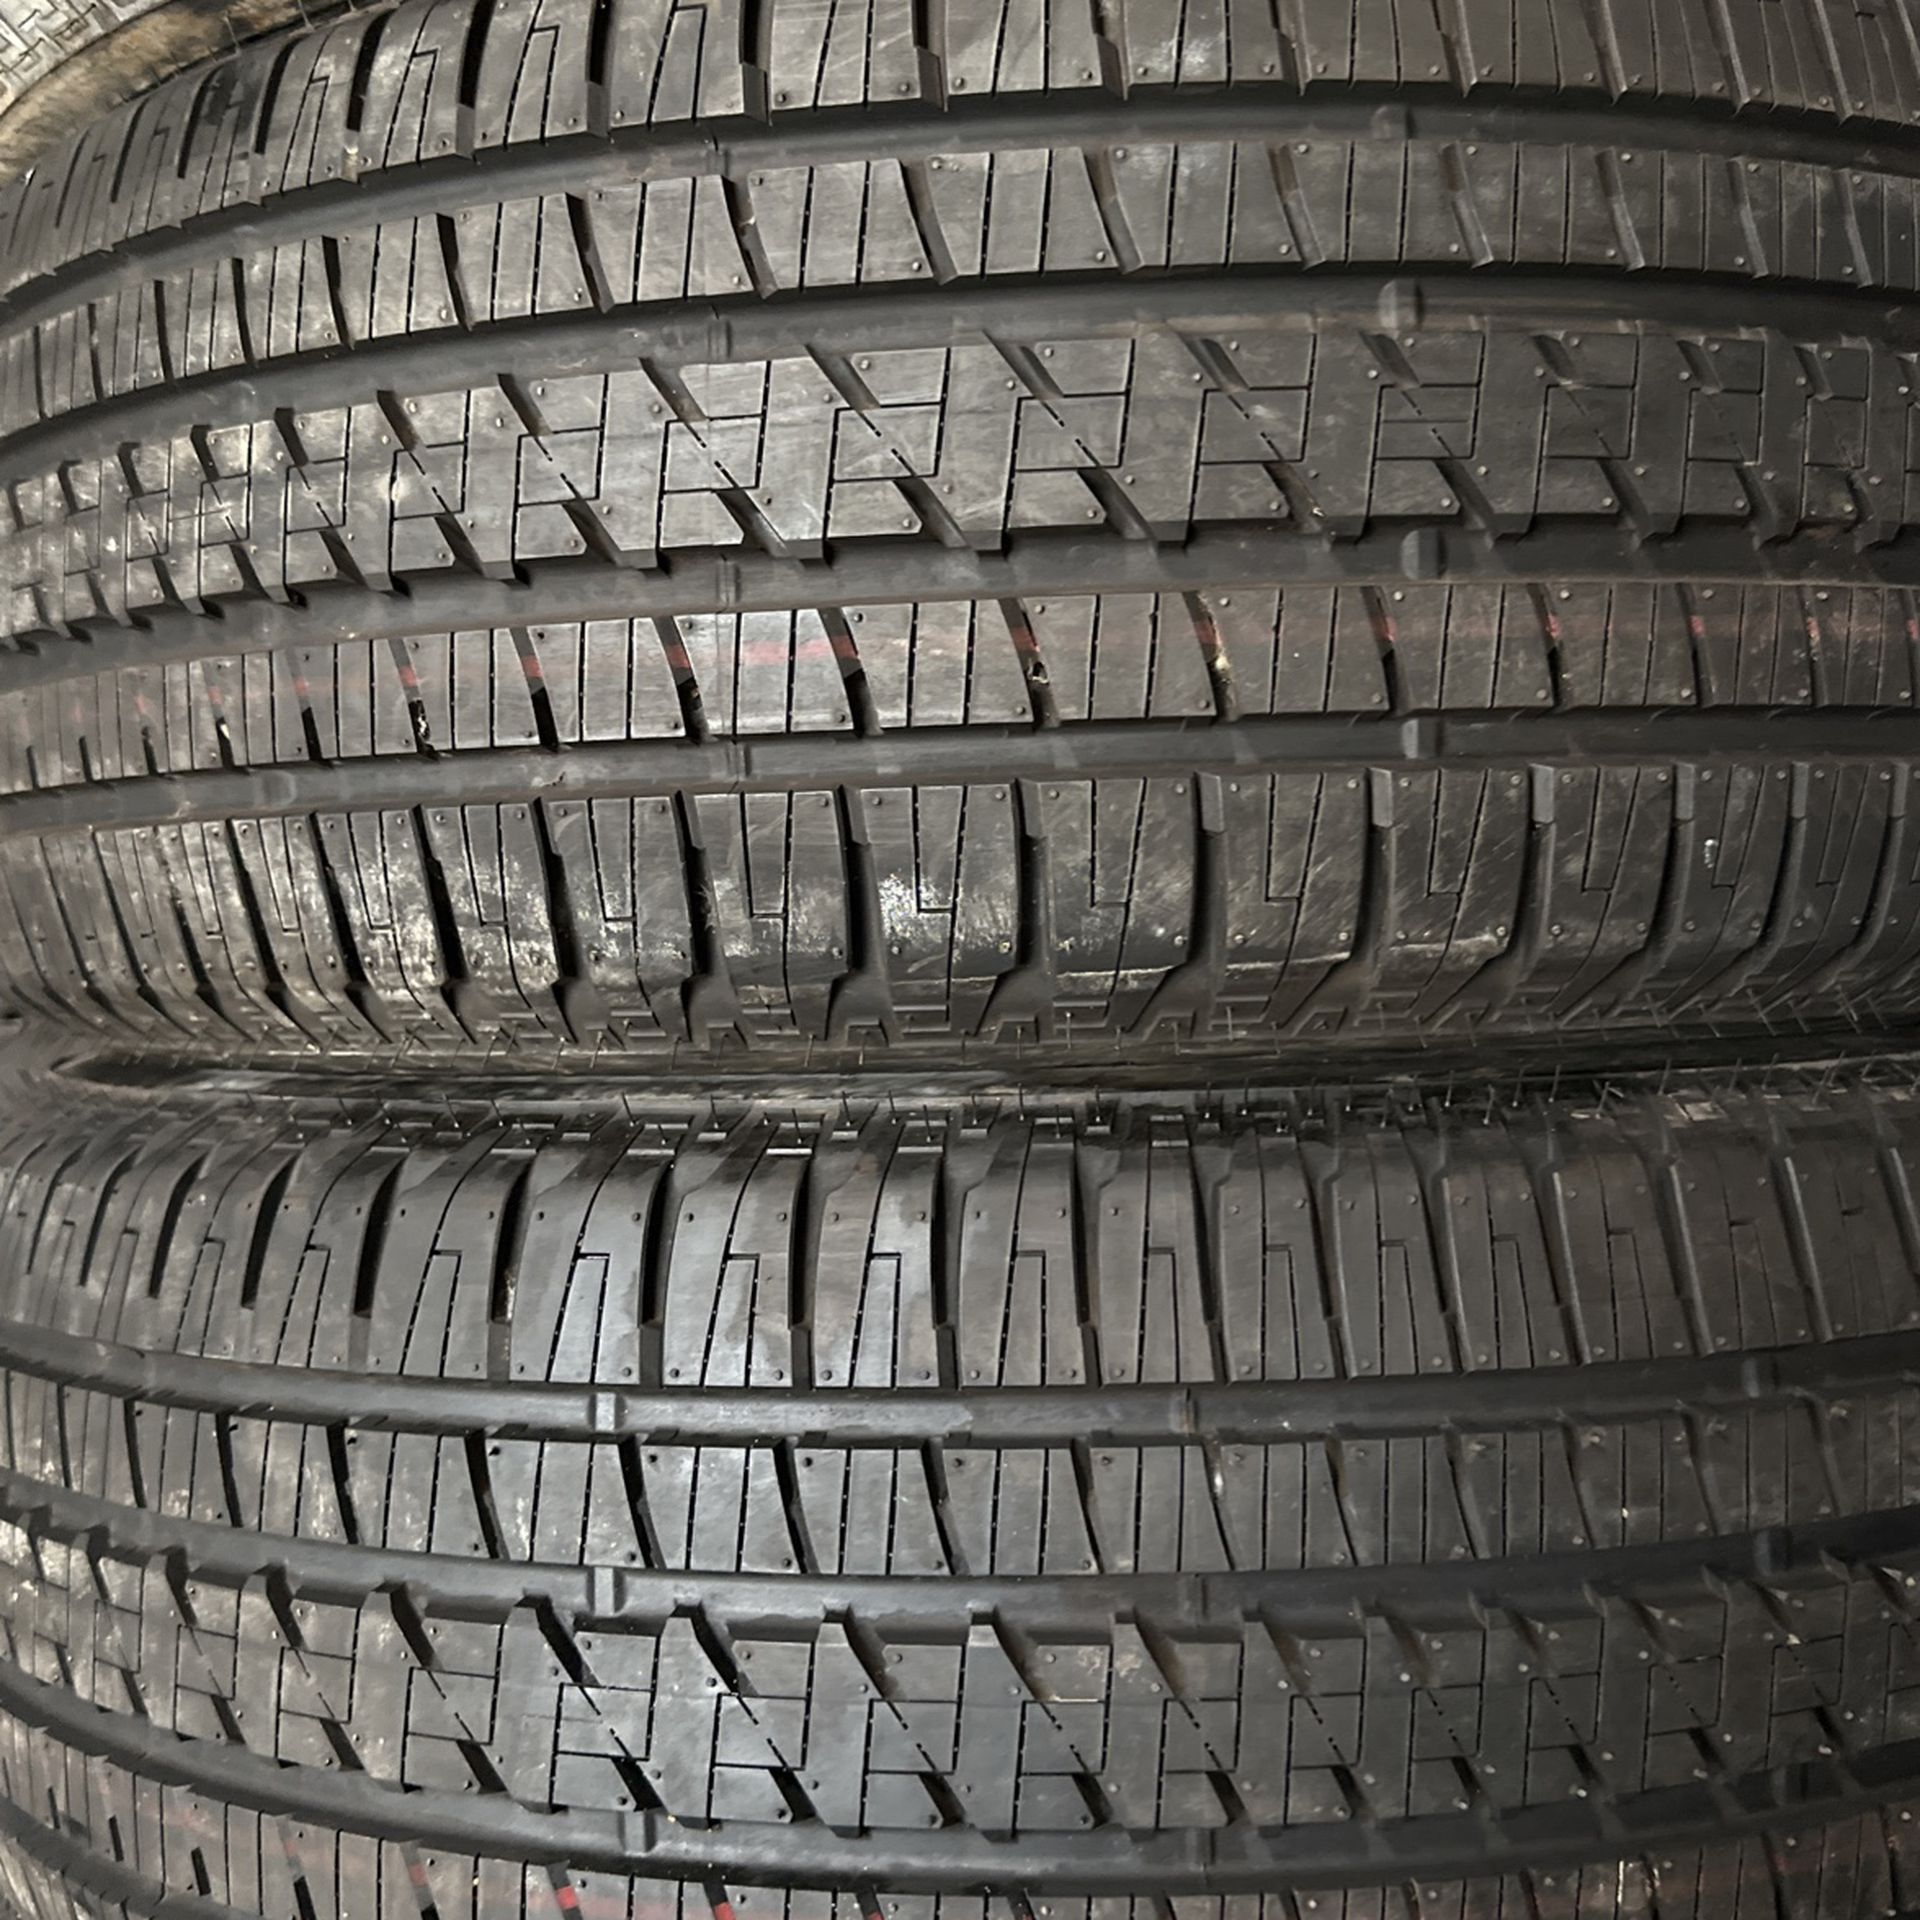 New Bridgestone Tires Take Offs 